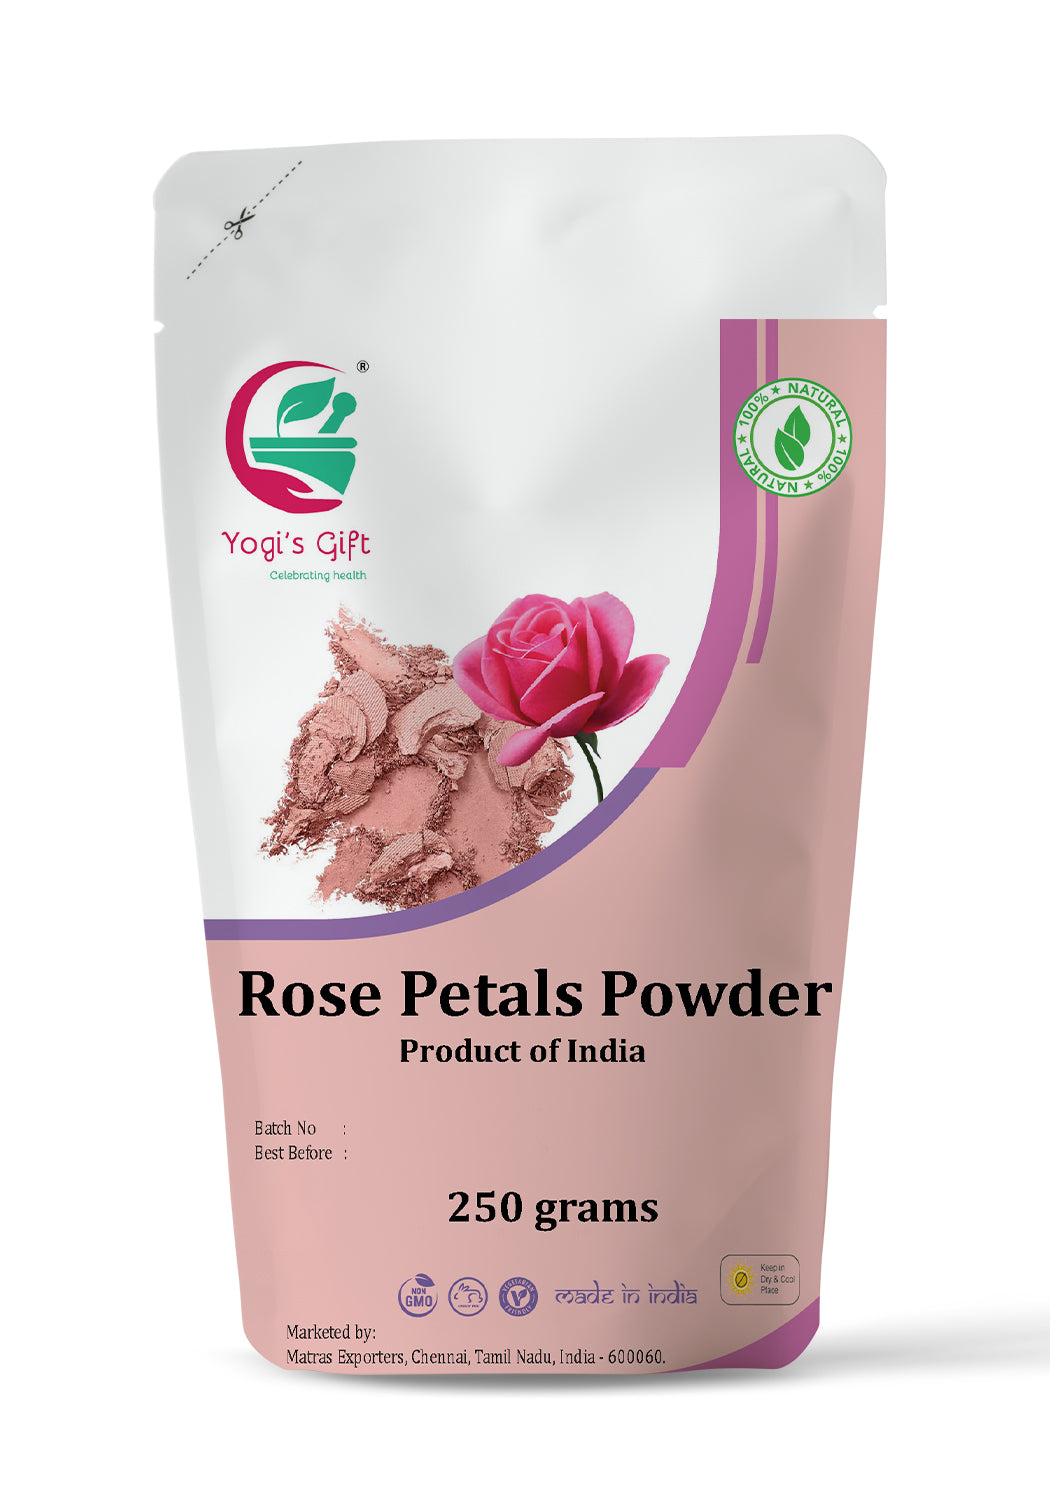 Rose Petal Powder | 250 grams | Make Tea, Smoothies or Lattes | Best Ingredient for face mask | Soothing Fragrance | Excellent Natural Skin Toner | by Yogi’s Gift®